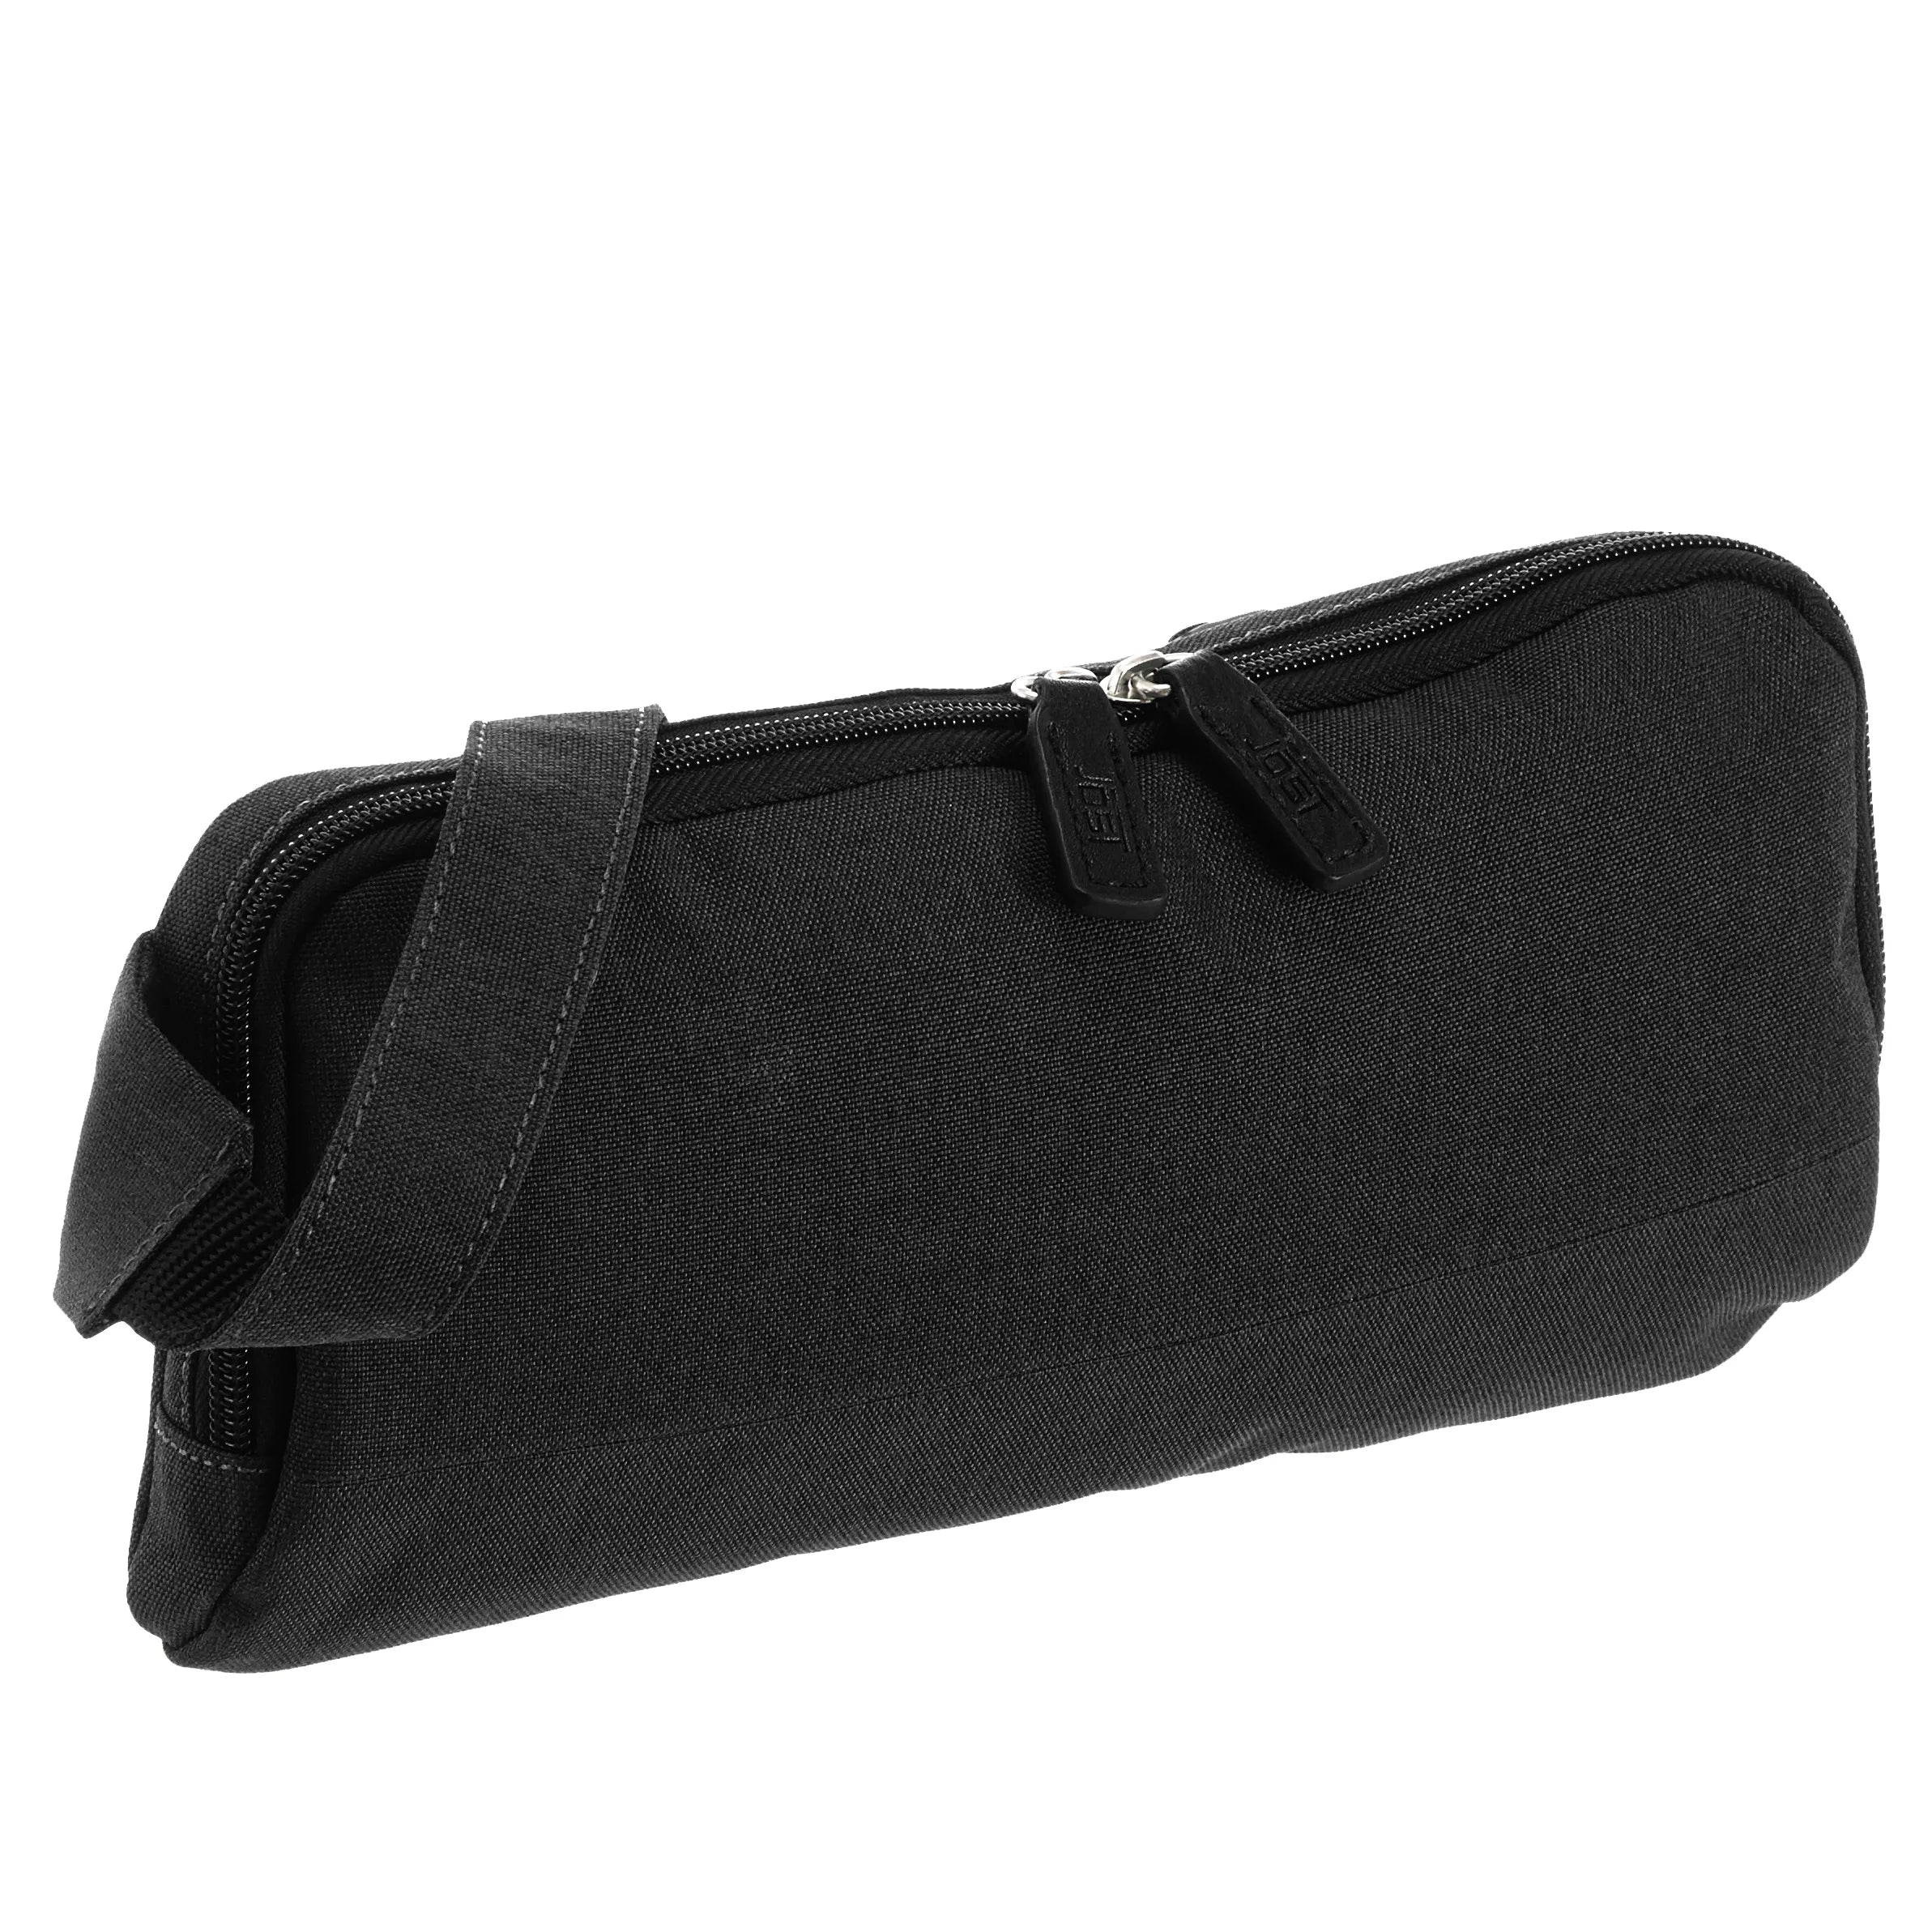 Jost Bergen Crossover Bag 28 cm - black